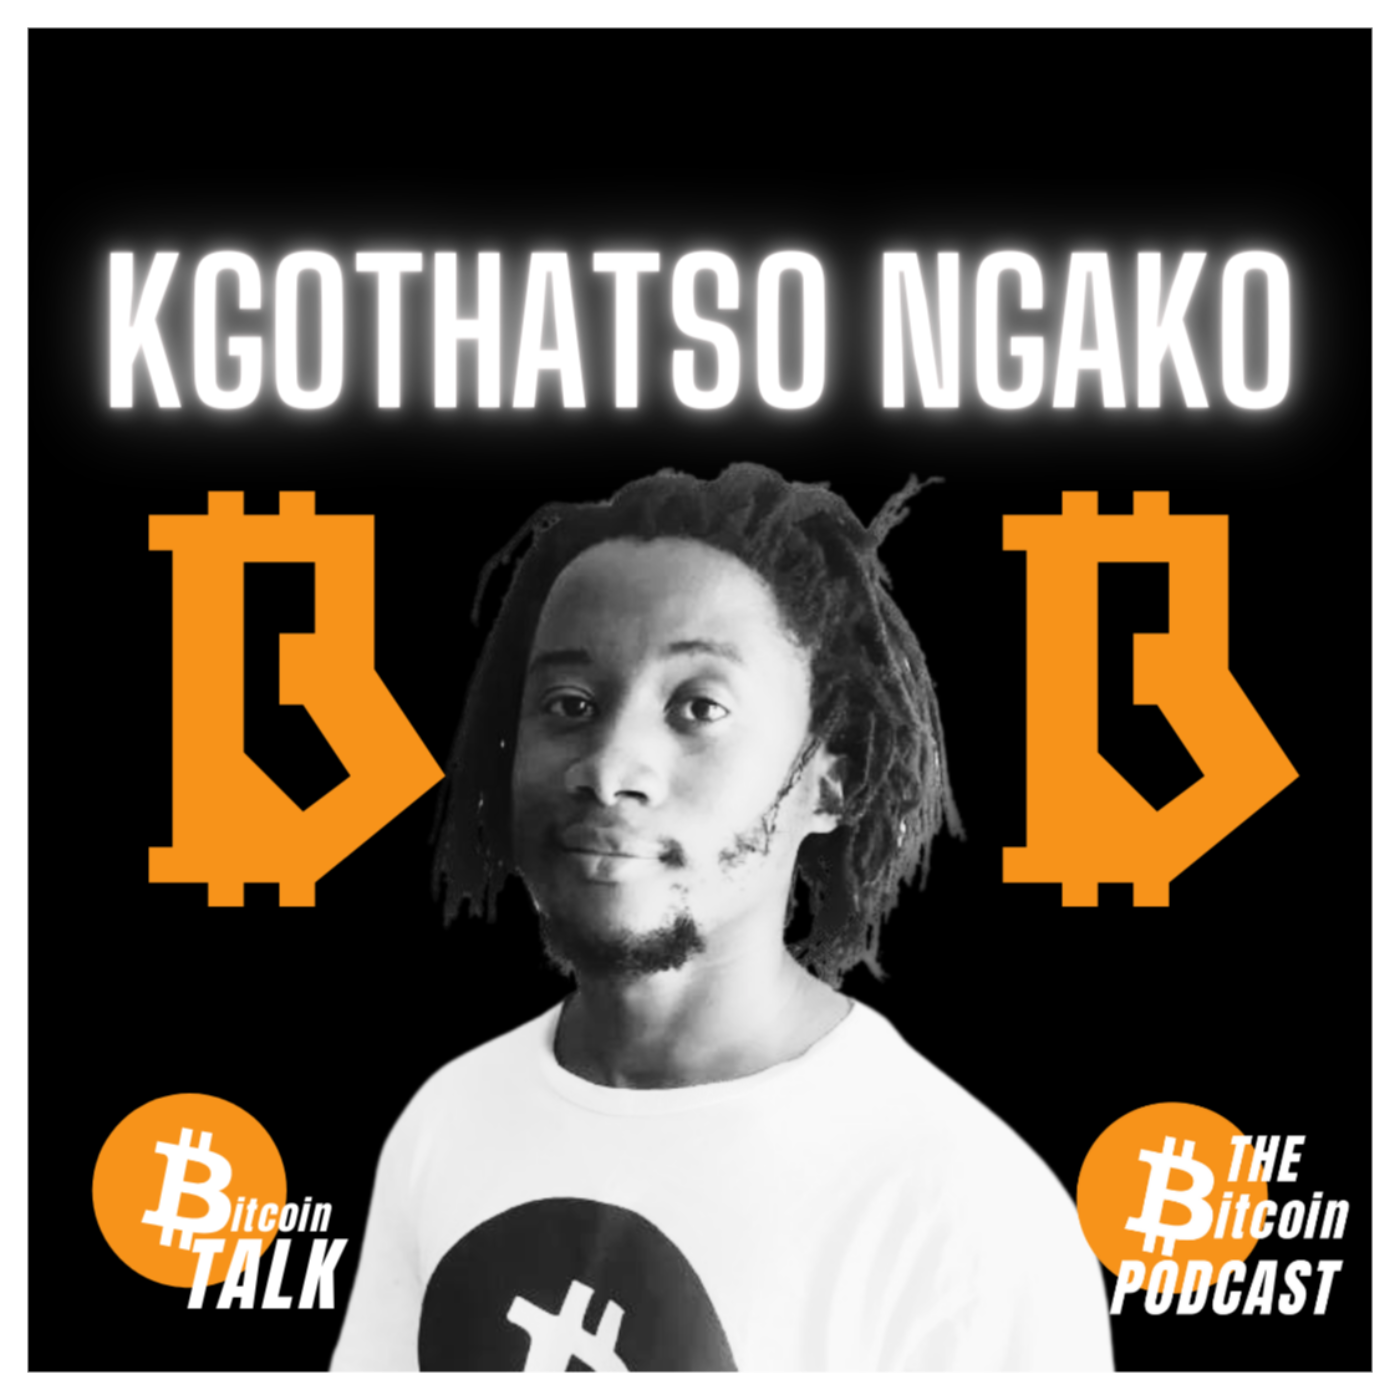 Machankura: Bitcoin without Internet - Kgothatso Ngako (Bitcoin Talk on THE Bitcoin Podcast)